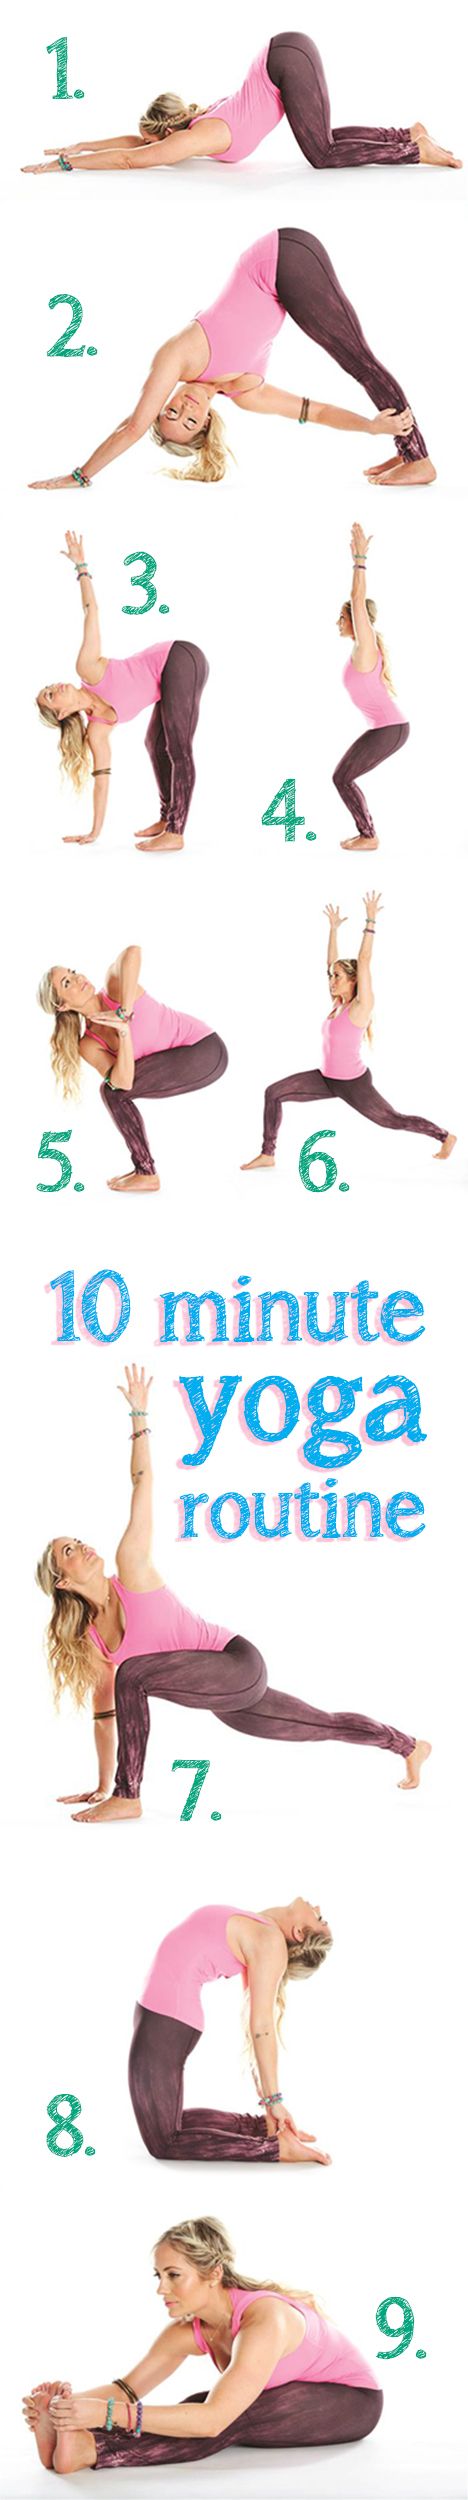 10 minute yoga routine